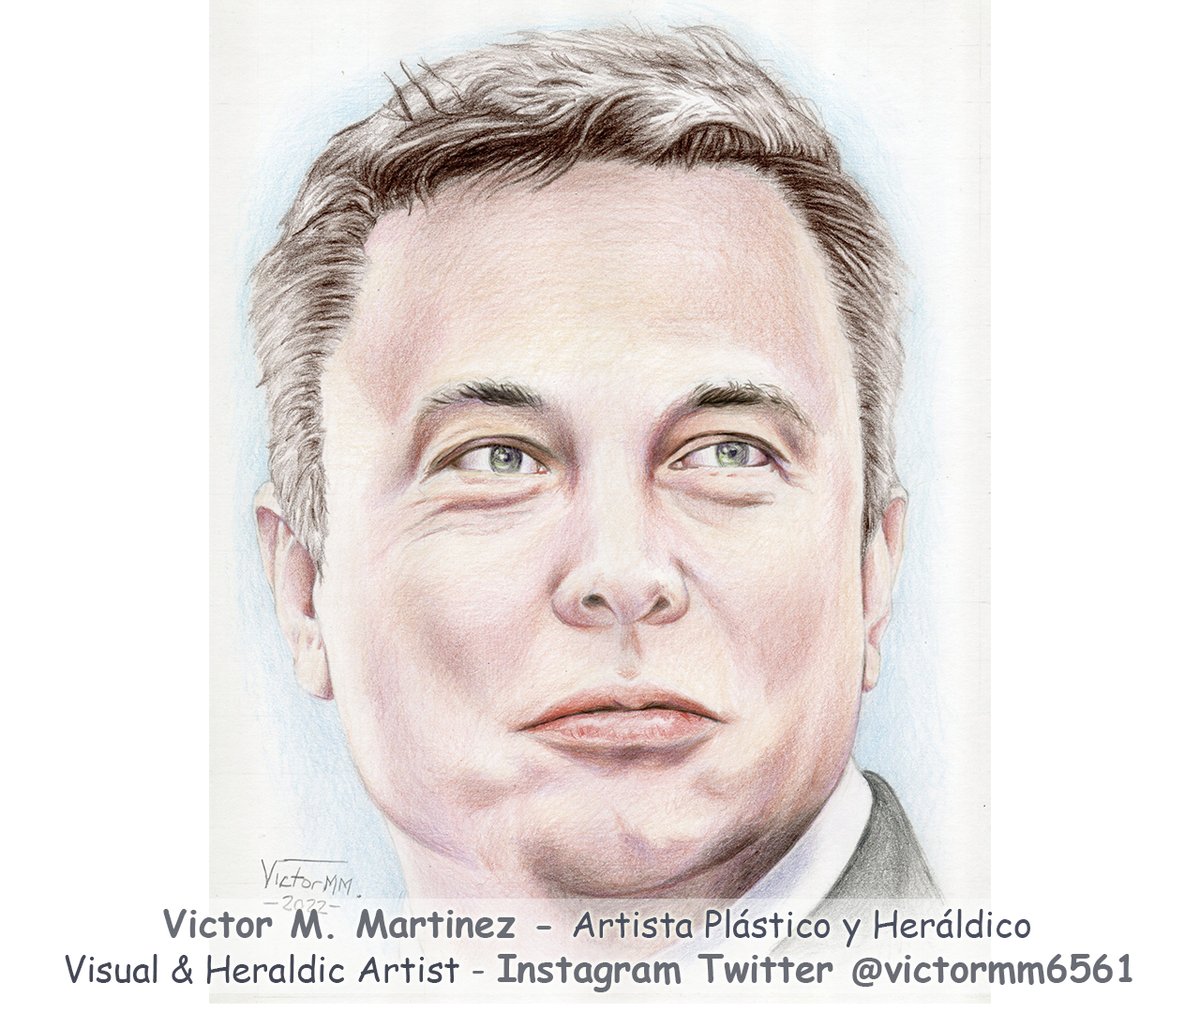 Elon Musk #ElonMusk #portrait retrato por by Victor M. Martinez, #Artista Plástico y Heráldico, #dibujo #drawing 28x22 cms, support and follow my work, apoye y siga mi obra. #ElonMusk #Elon #Musk #Tesla #Tech #Future #SpaceX #ArtForSale #Art #Science #Arte #Carabobo #Venezuela